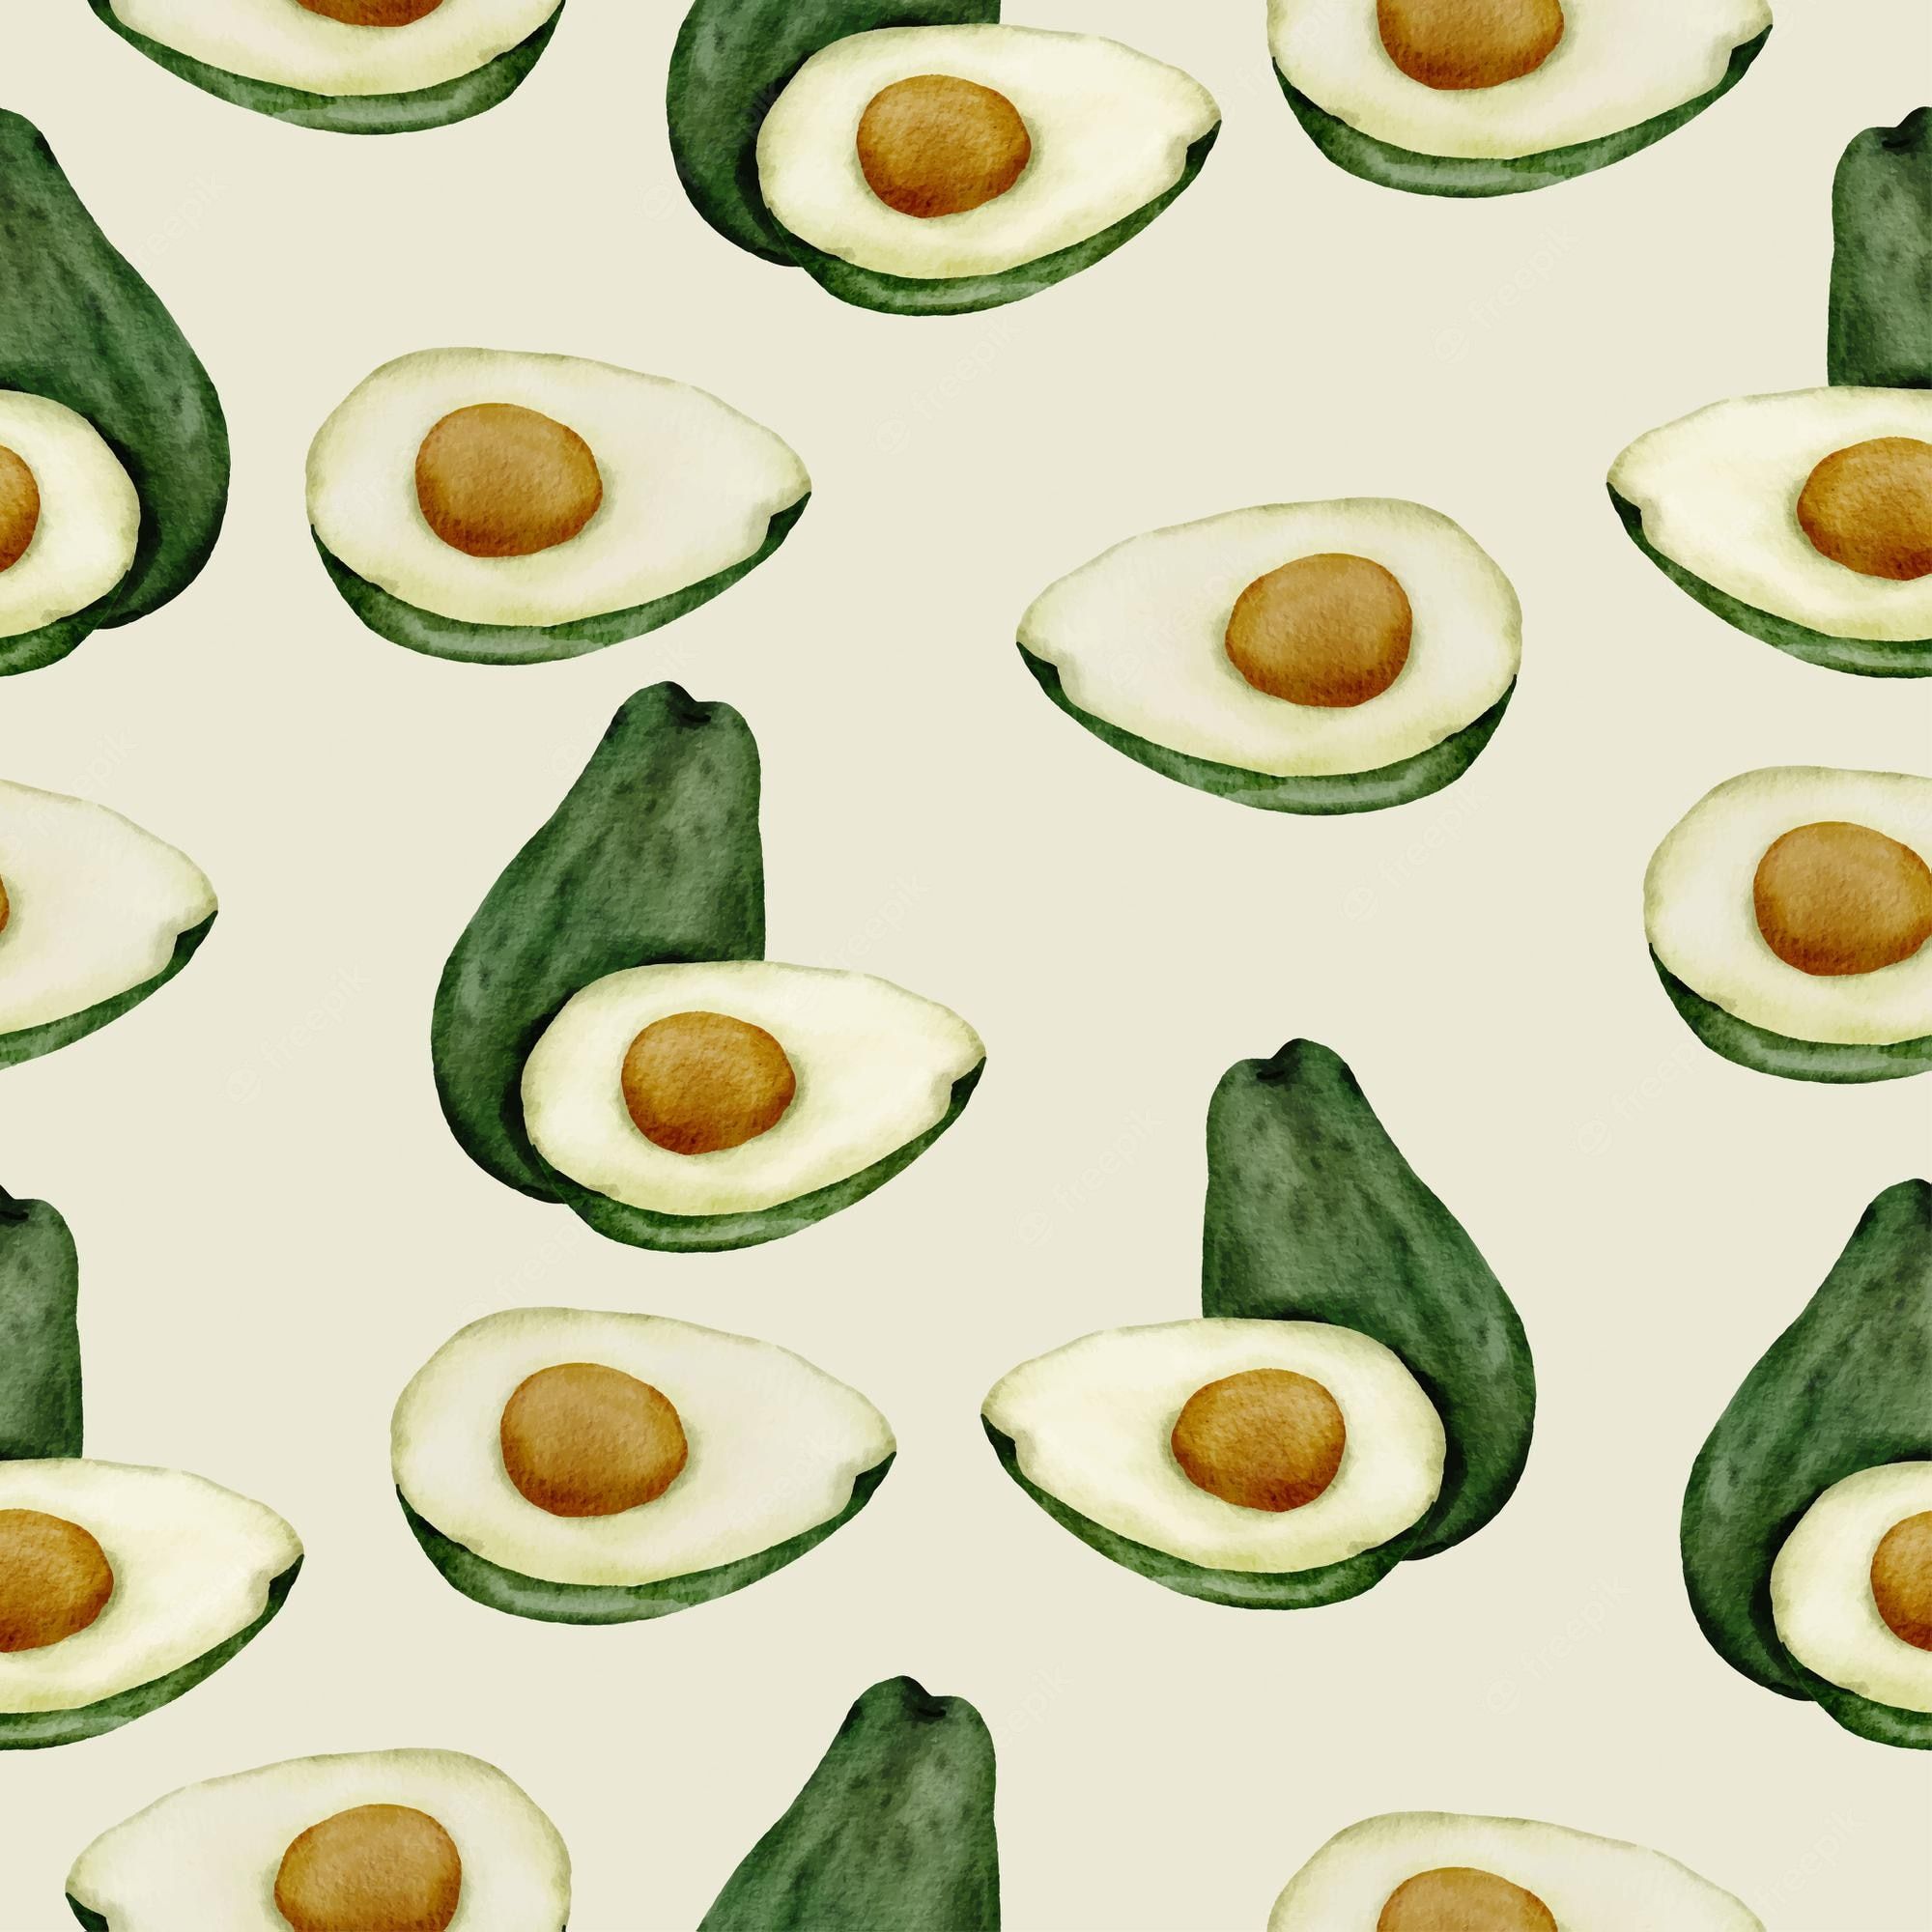 Avocado wallpaper Vectors & Illustrations for Free Download